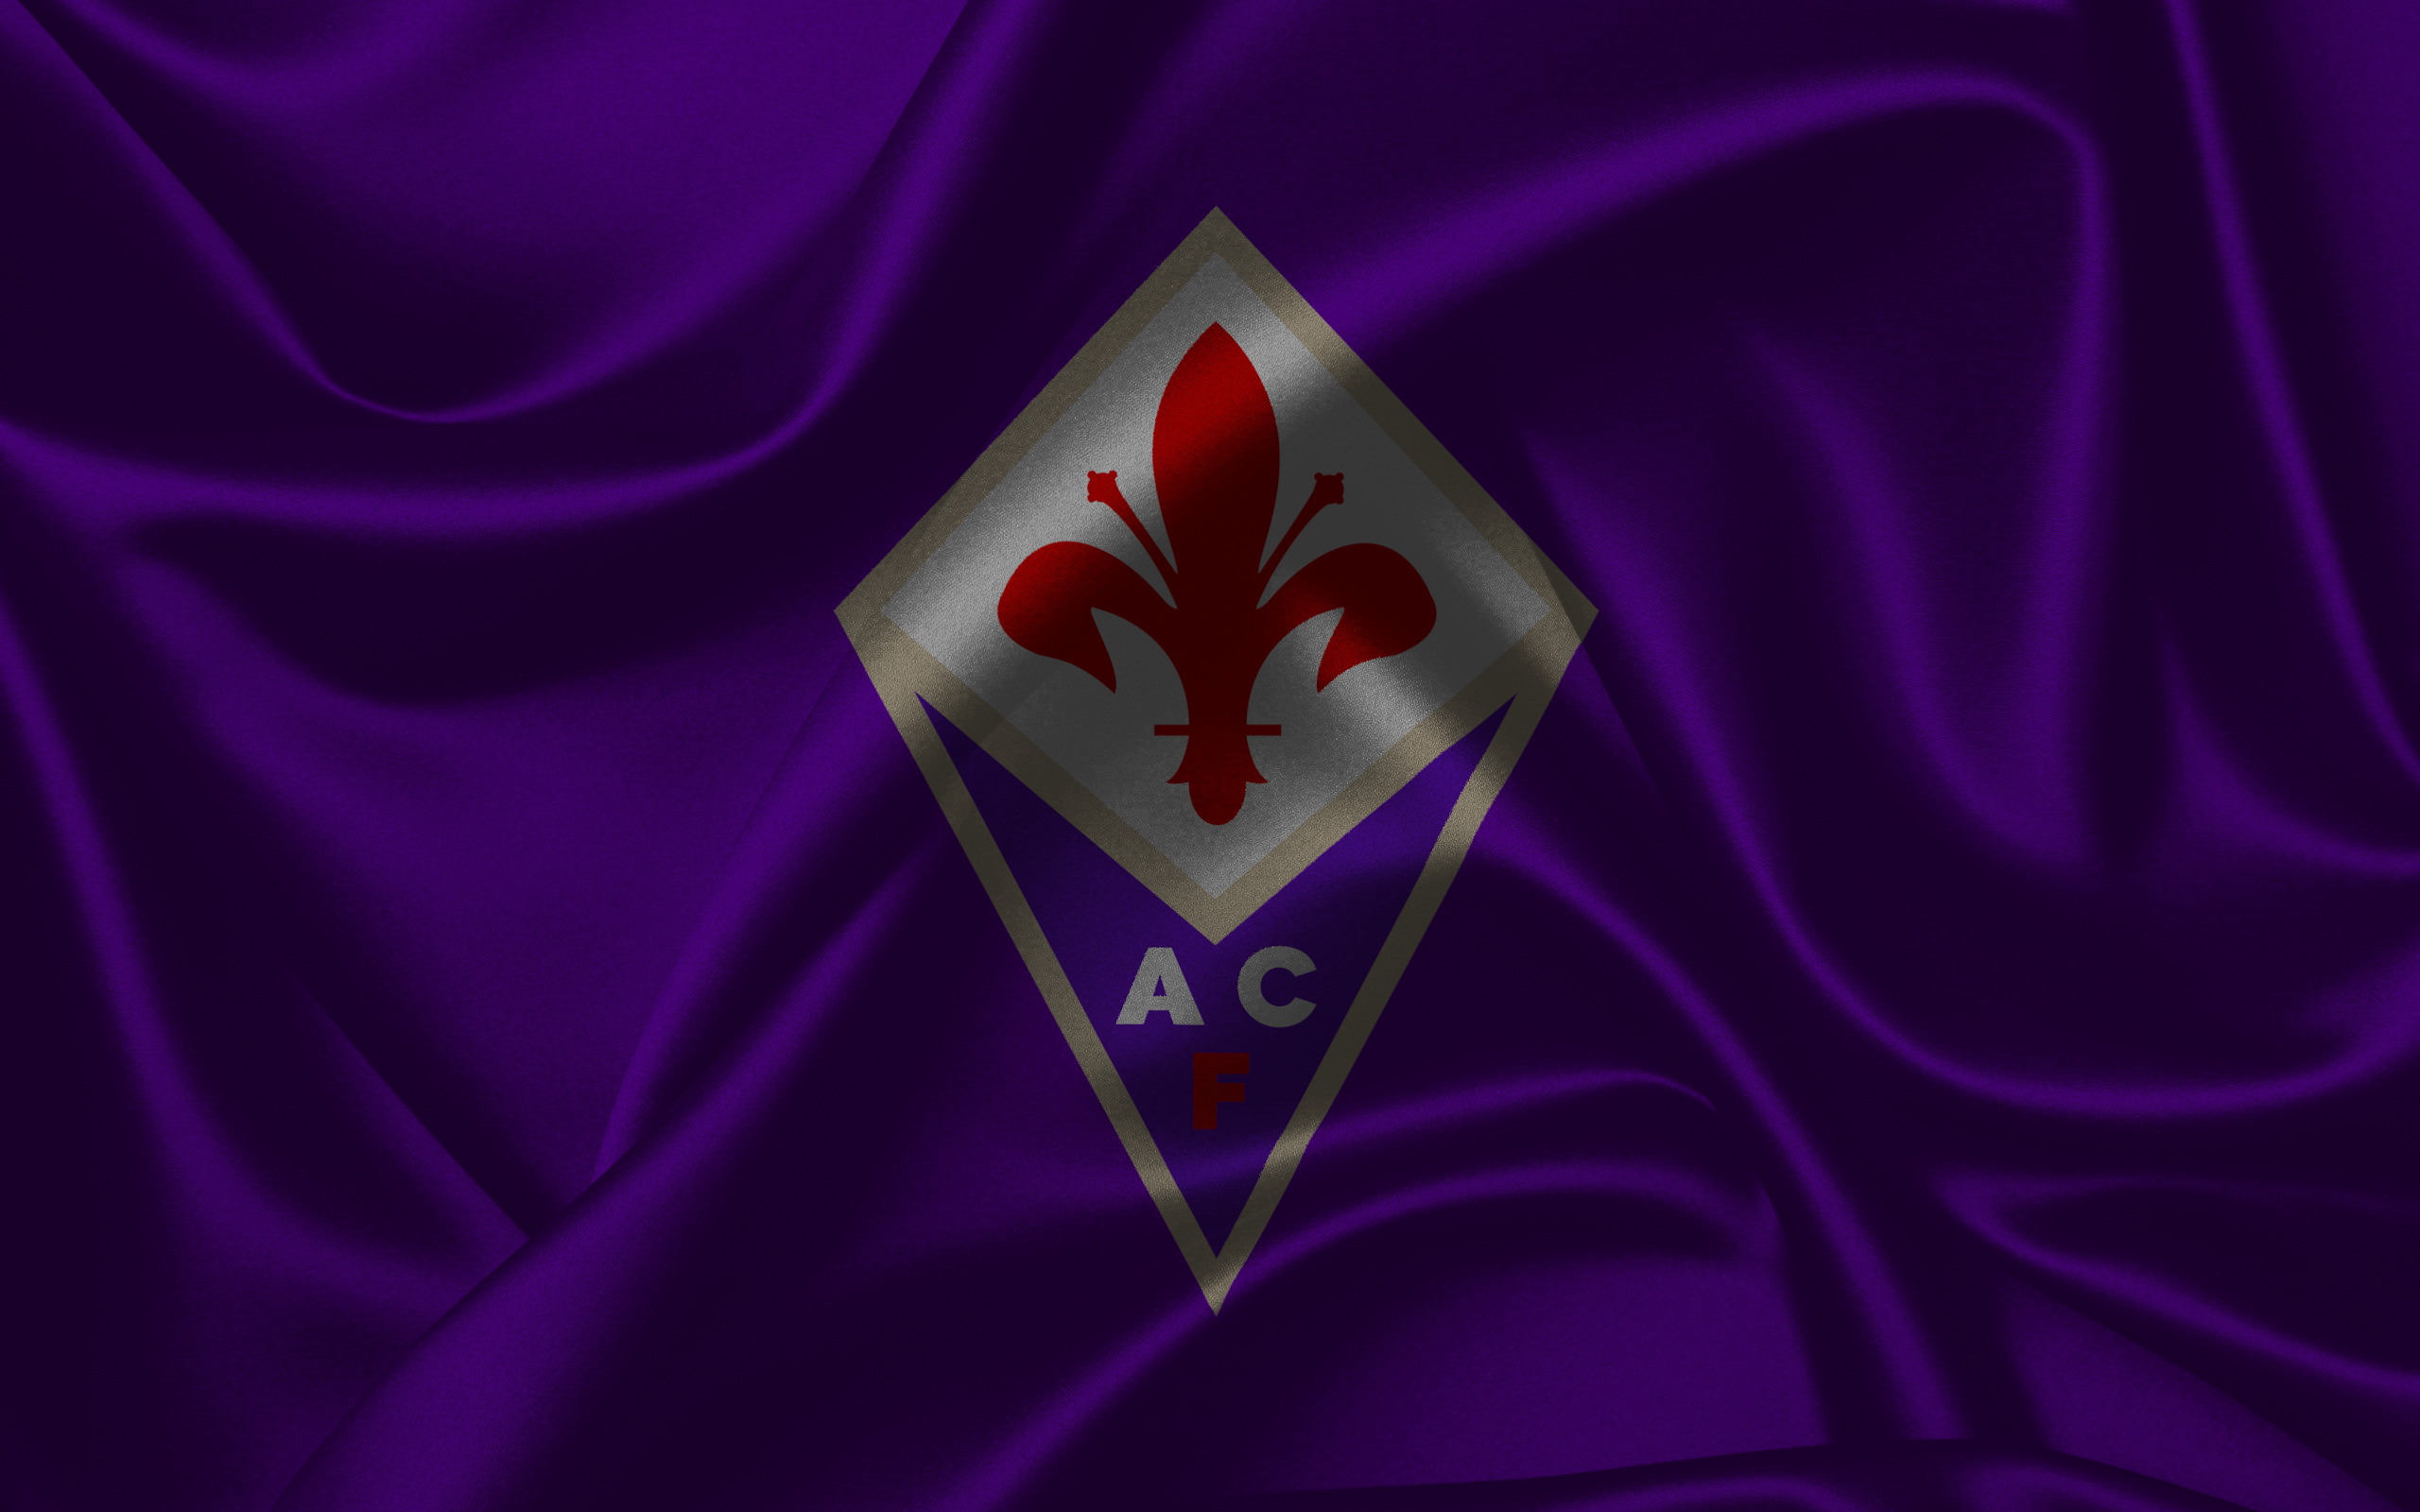 Acf Fiorentina Wallpapers